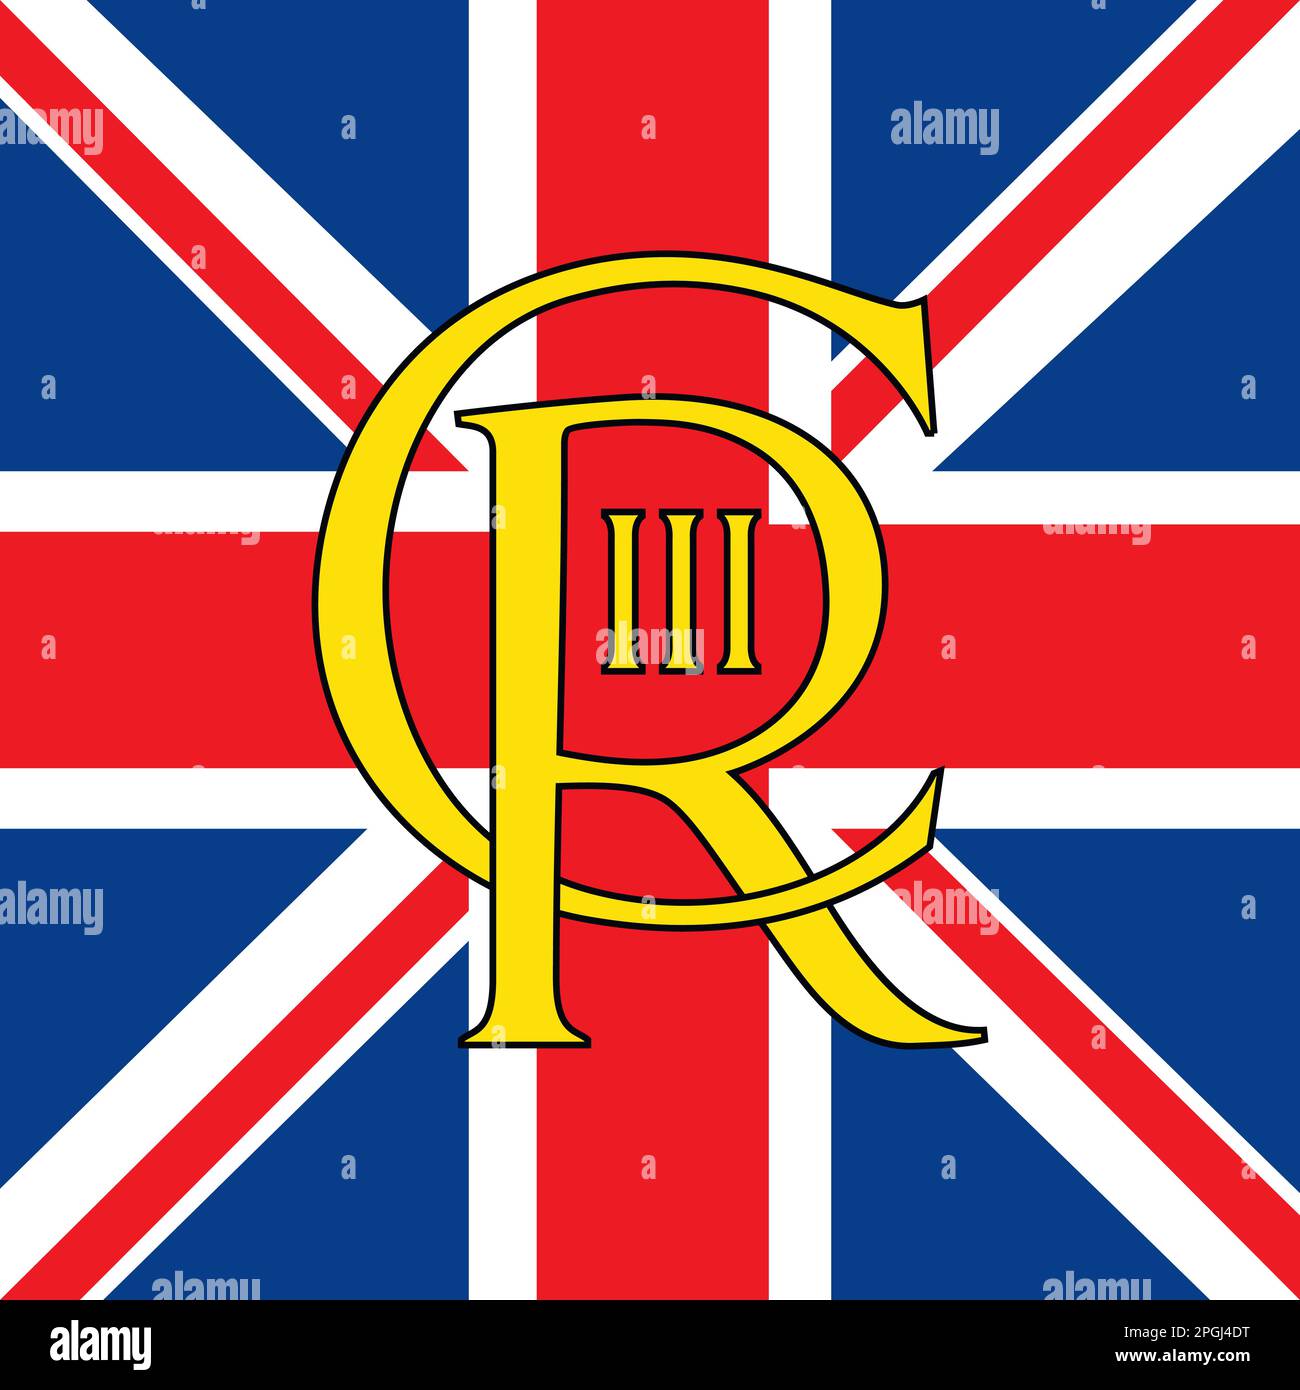 Charles III third symbol on the british flag, United Kingdom, vector illustration Stock Vector